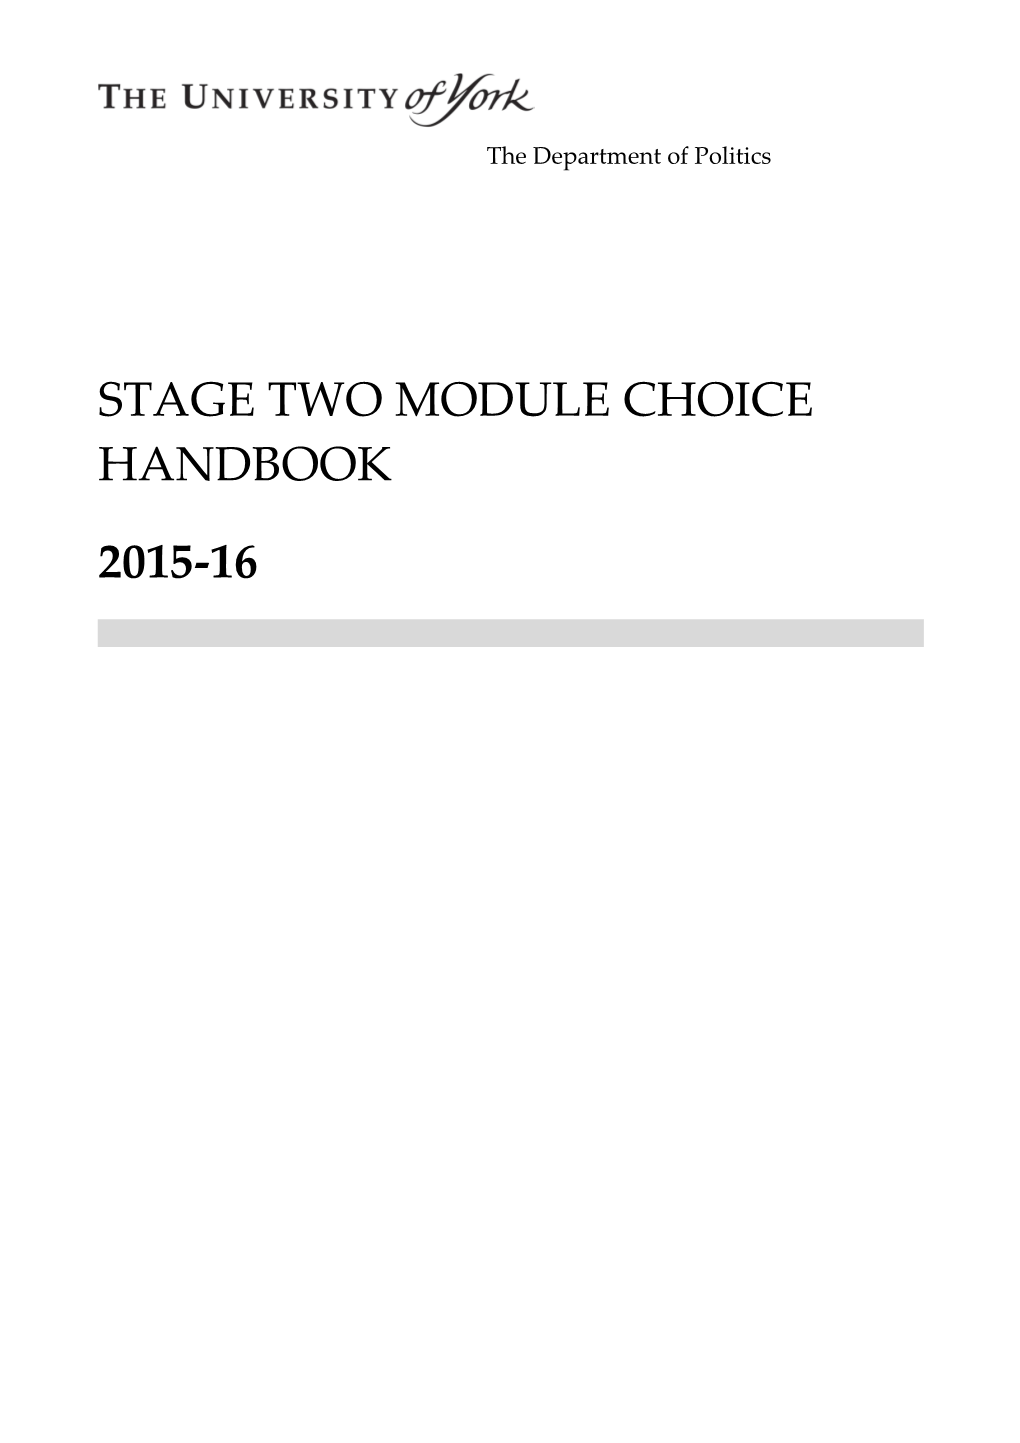 Stage Twomodule Choice Handbook